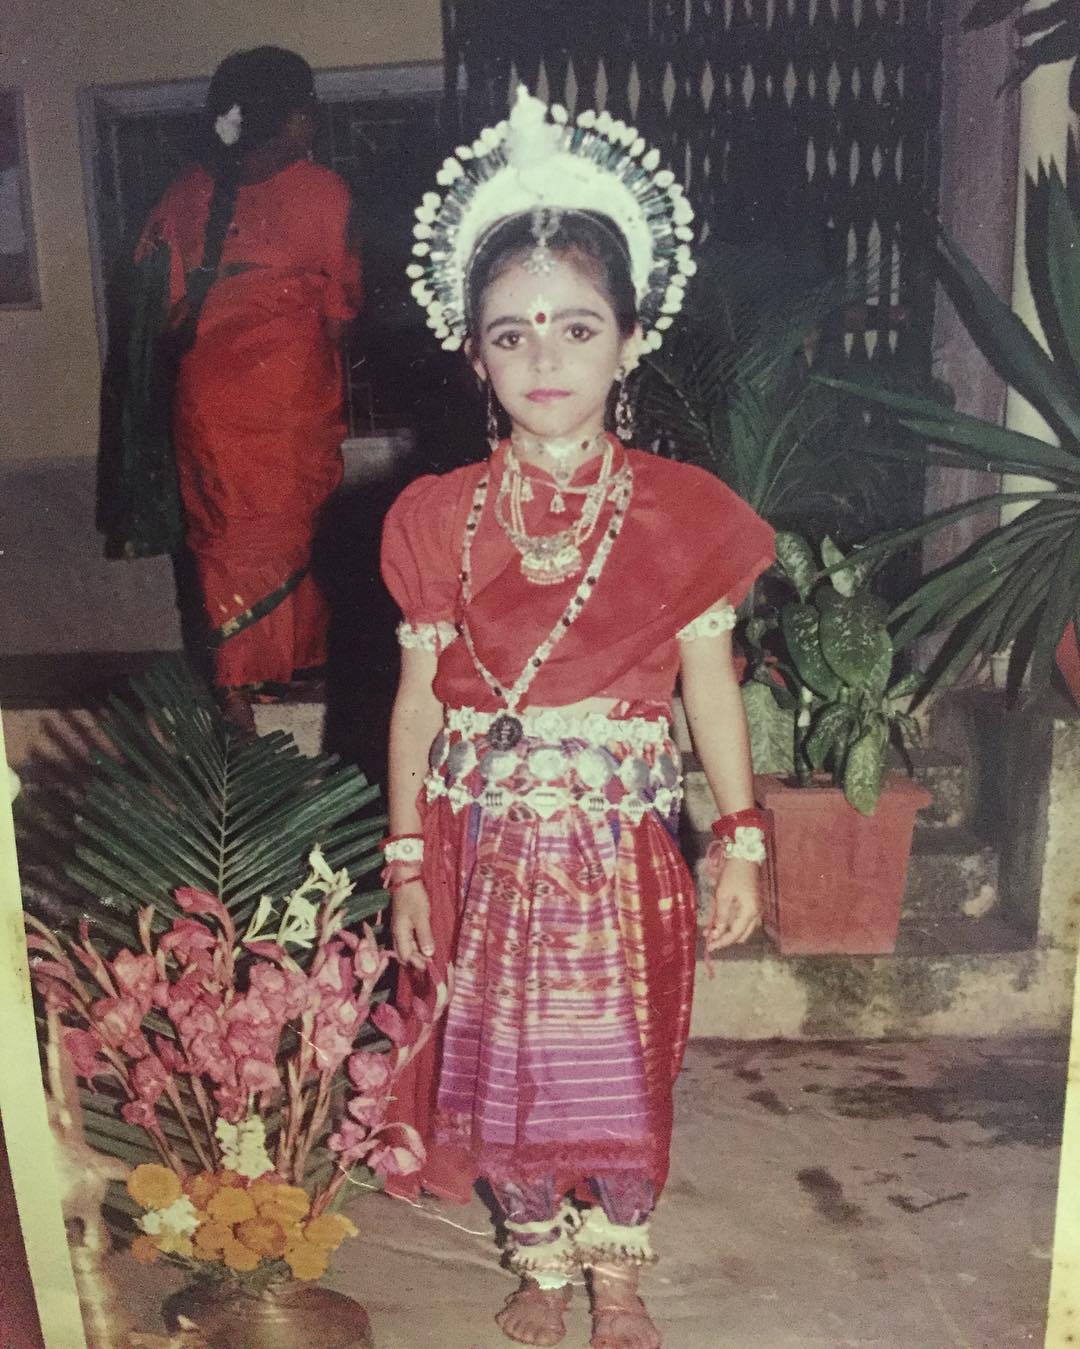 Childhood image of Madhurima Tuli